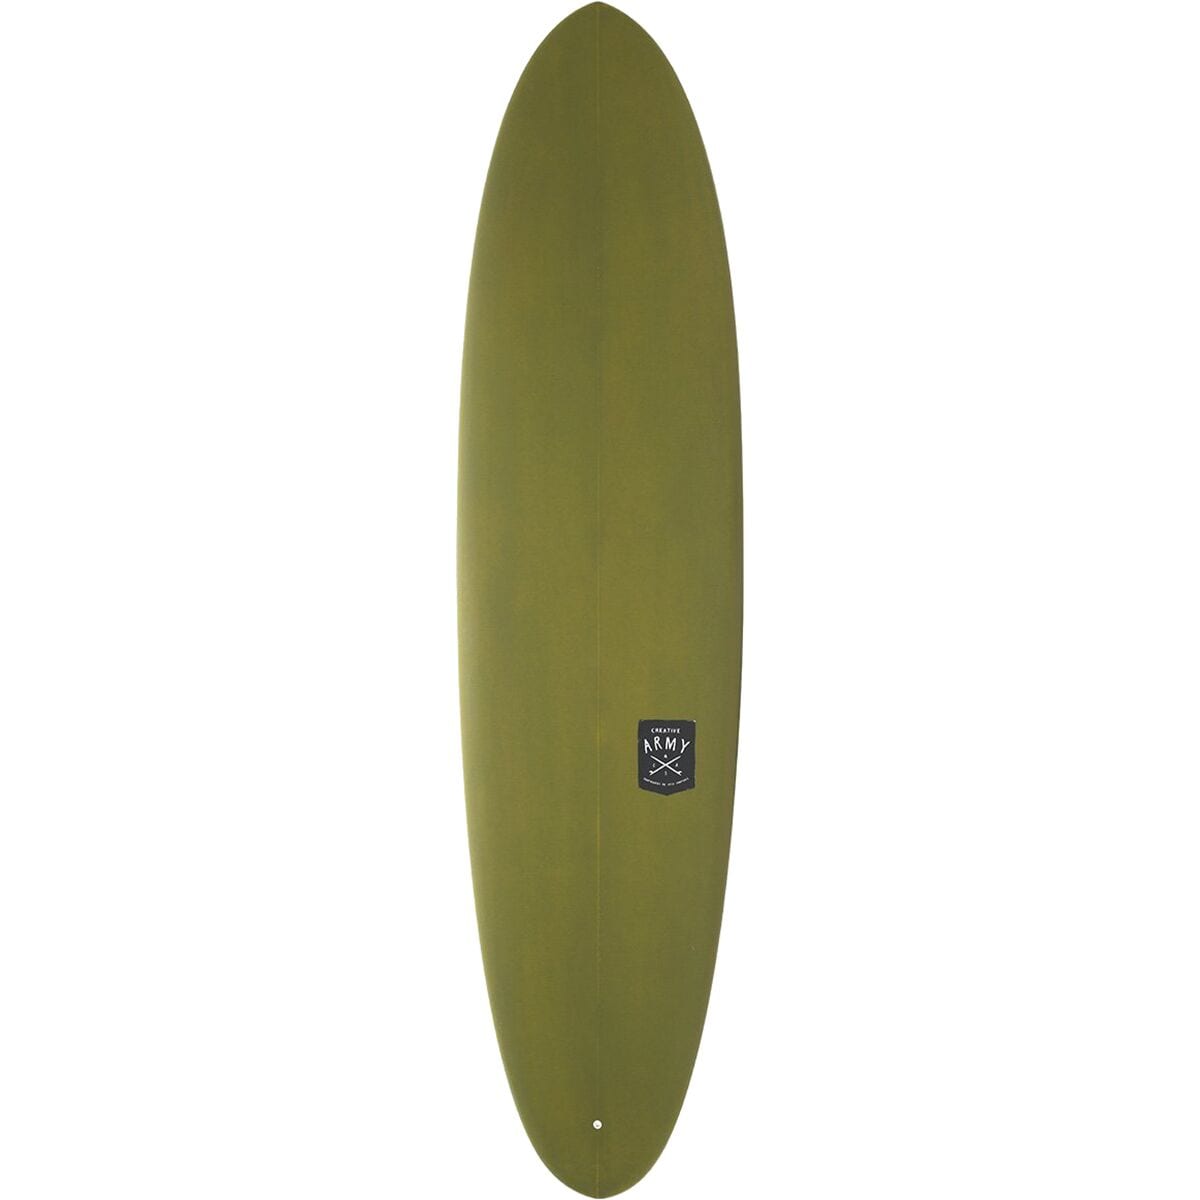 Creative Huevo PU Surfboard - Surf